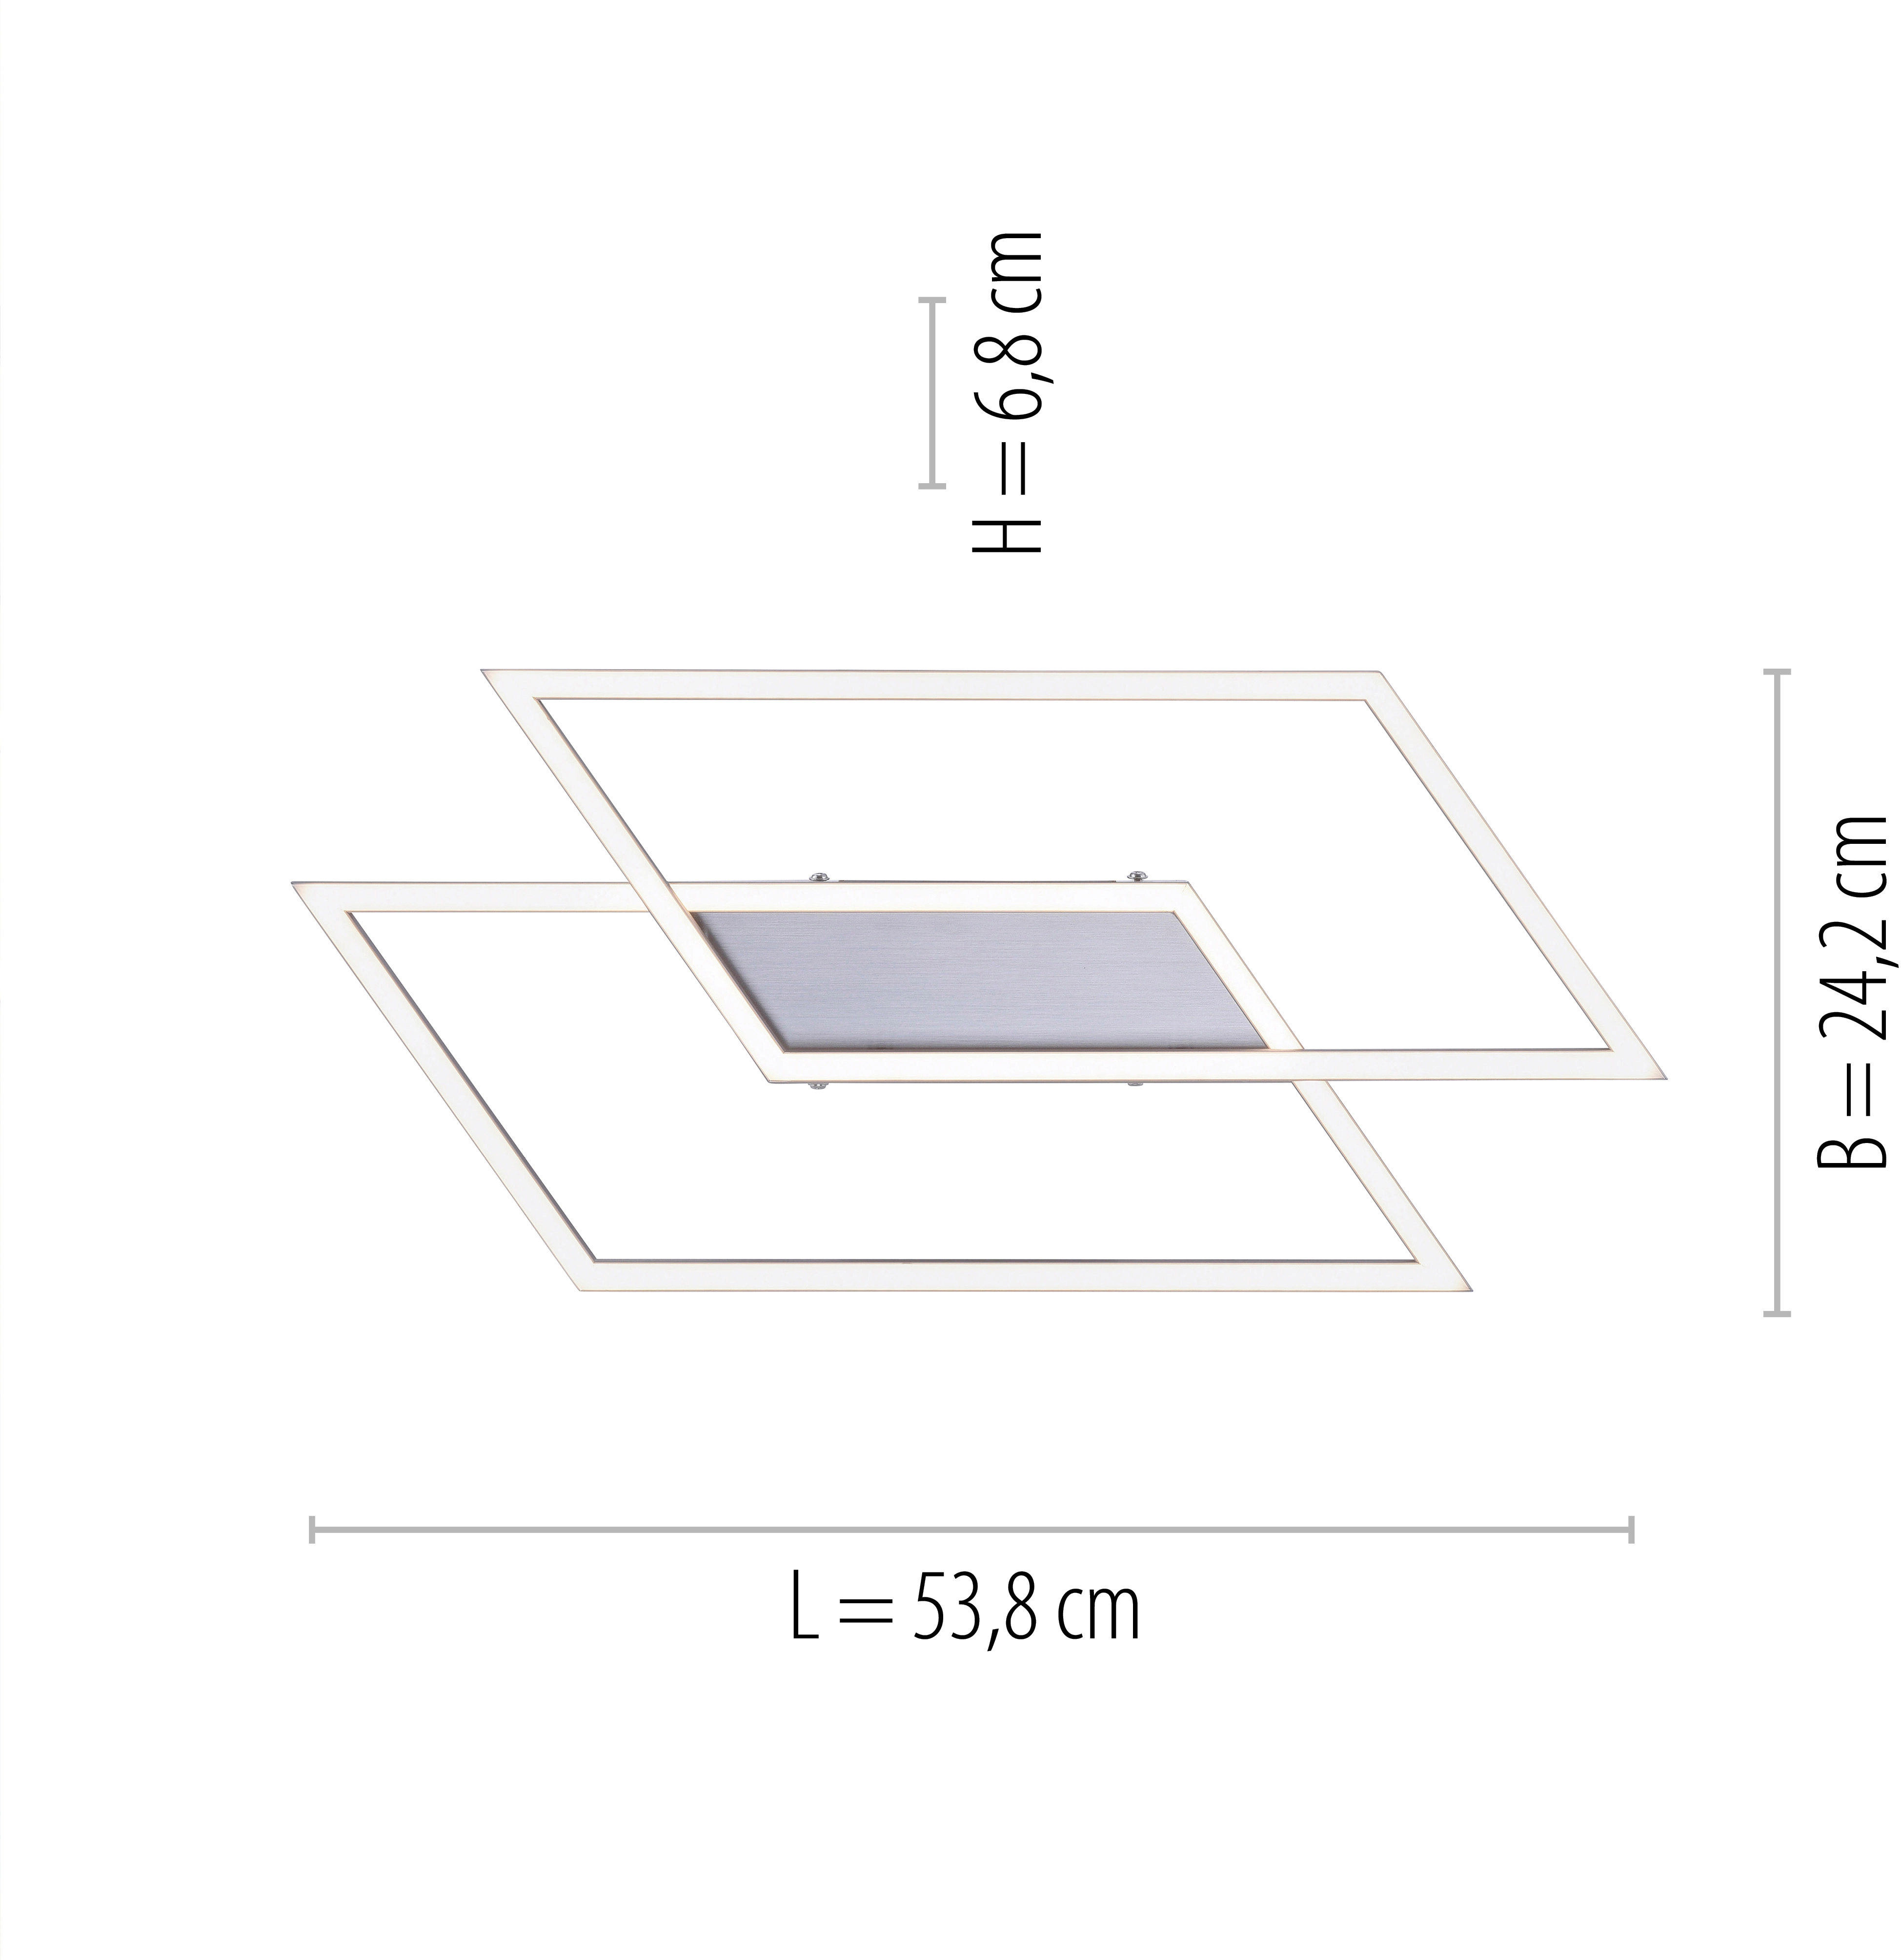 LED-Deckenleuchte Stahl Paul x cm Inigo 53,8 24,2 2-flammig Neuhaus cm